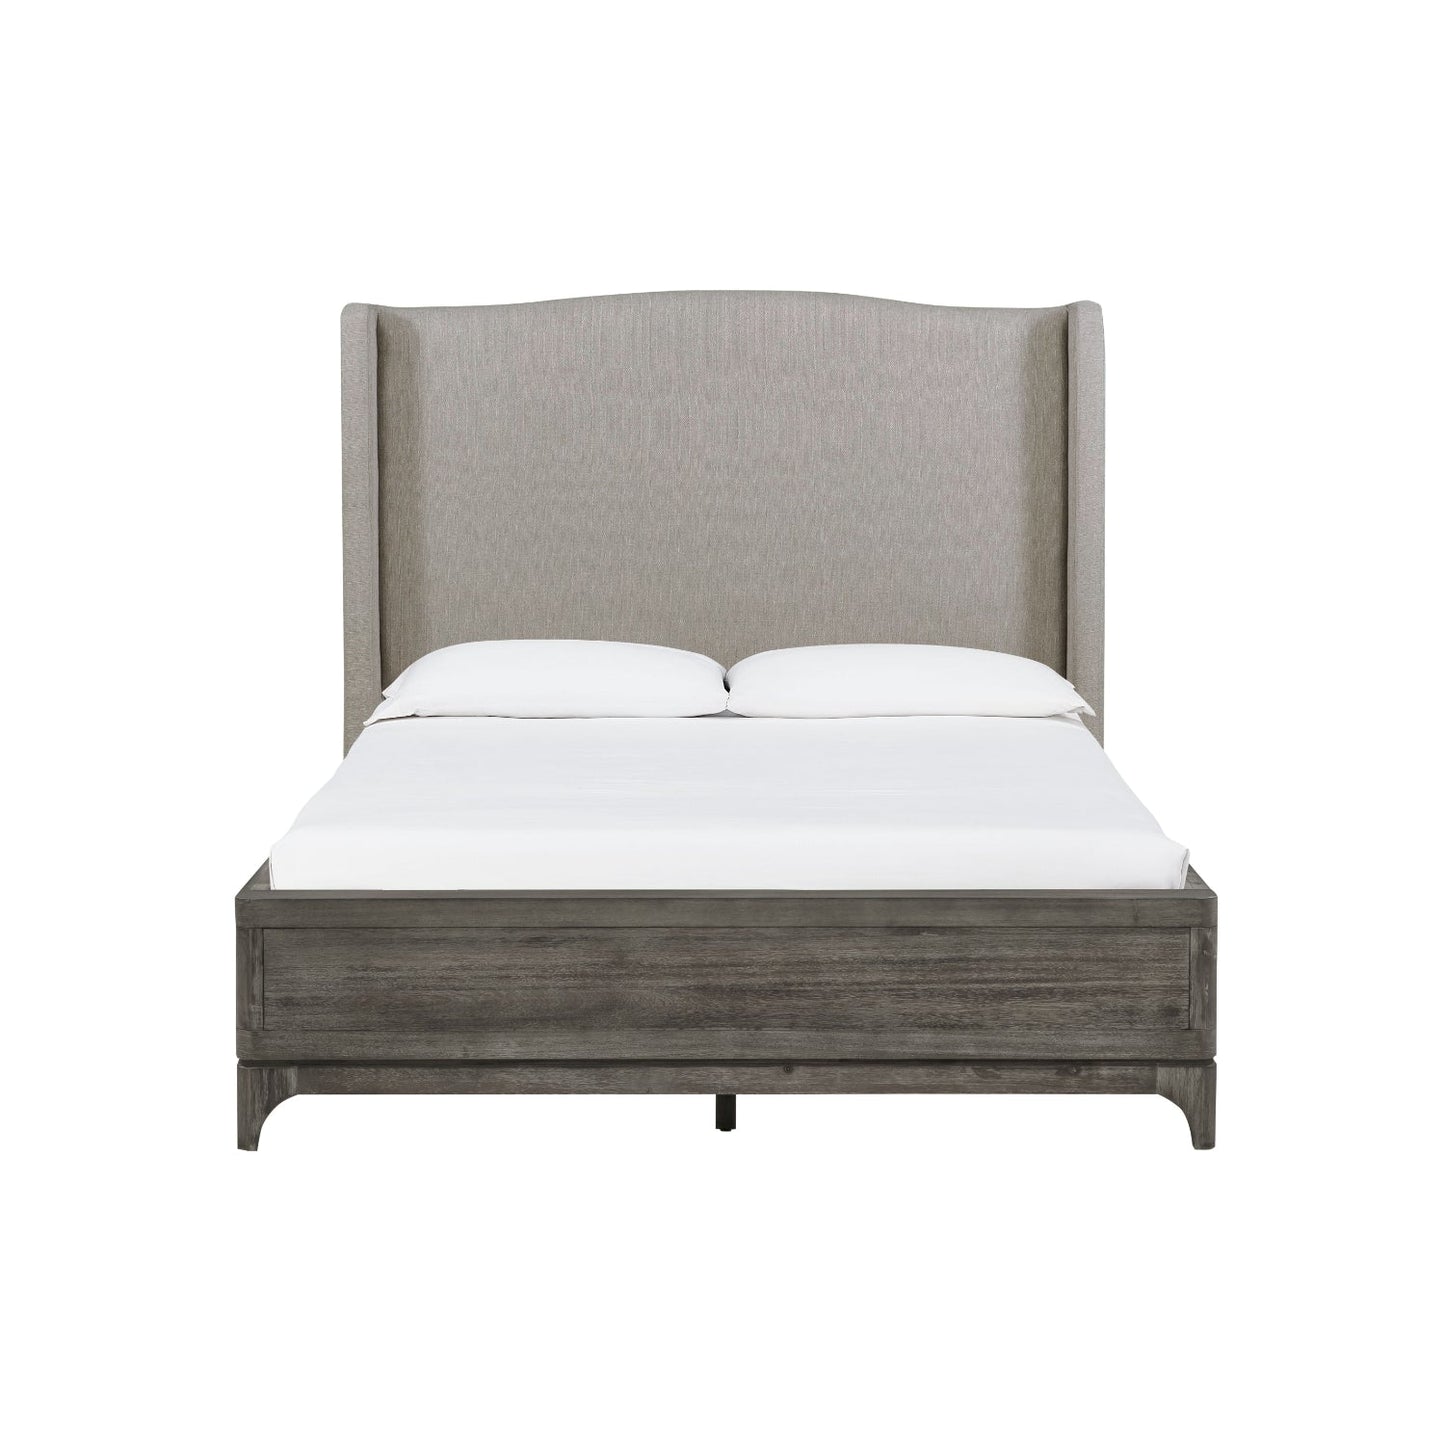 Modus Cicero Queen Upholstered Bed in Rustic Latte